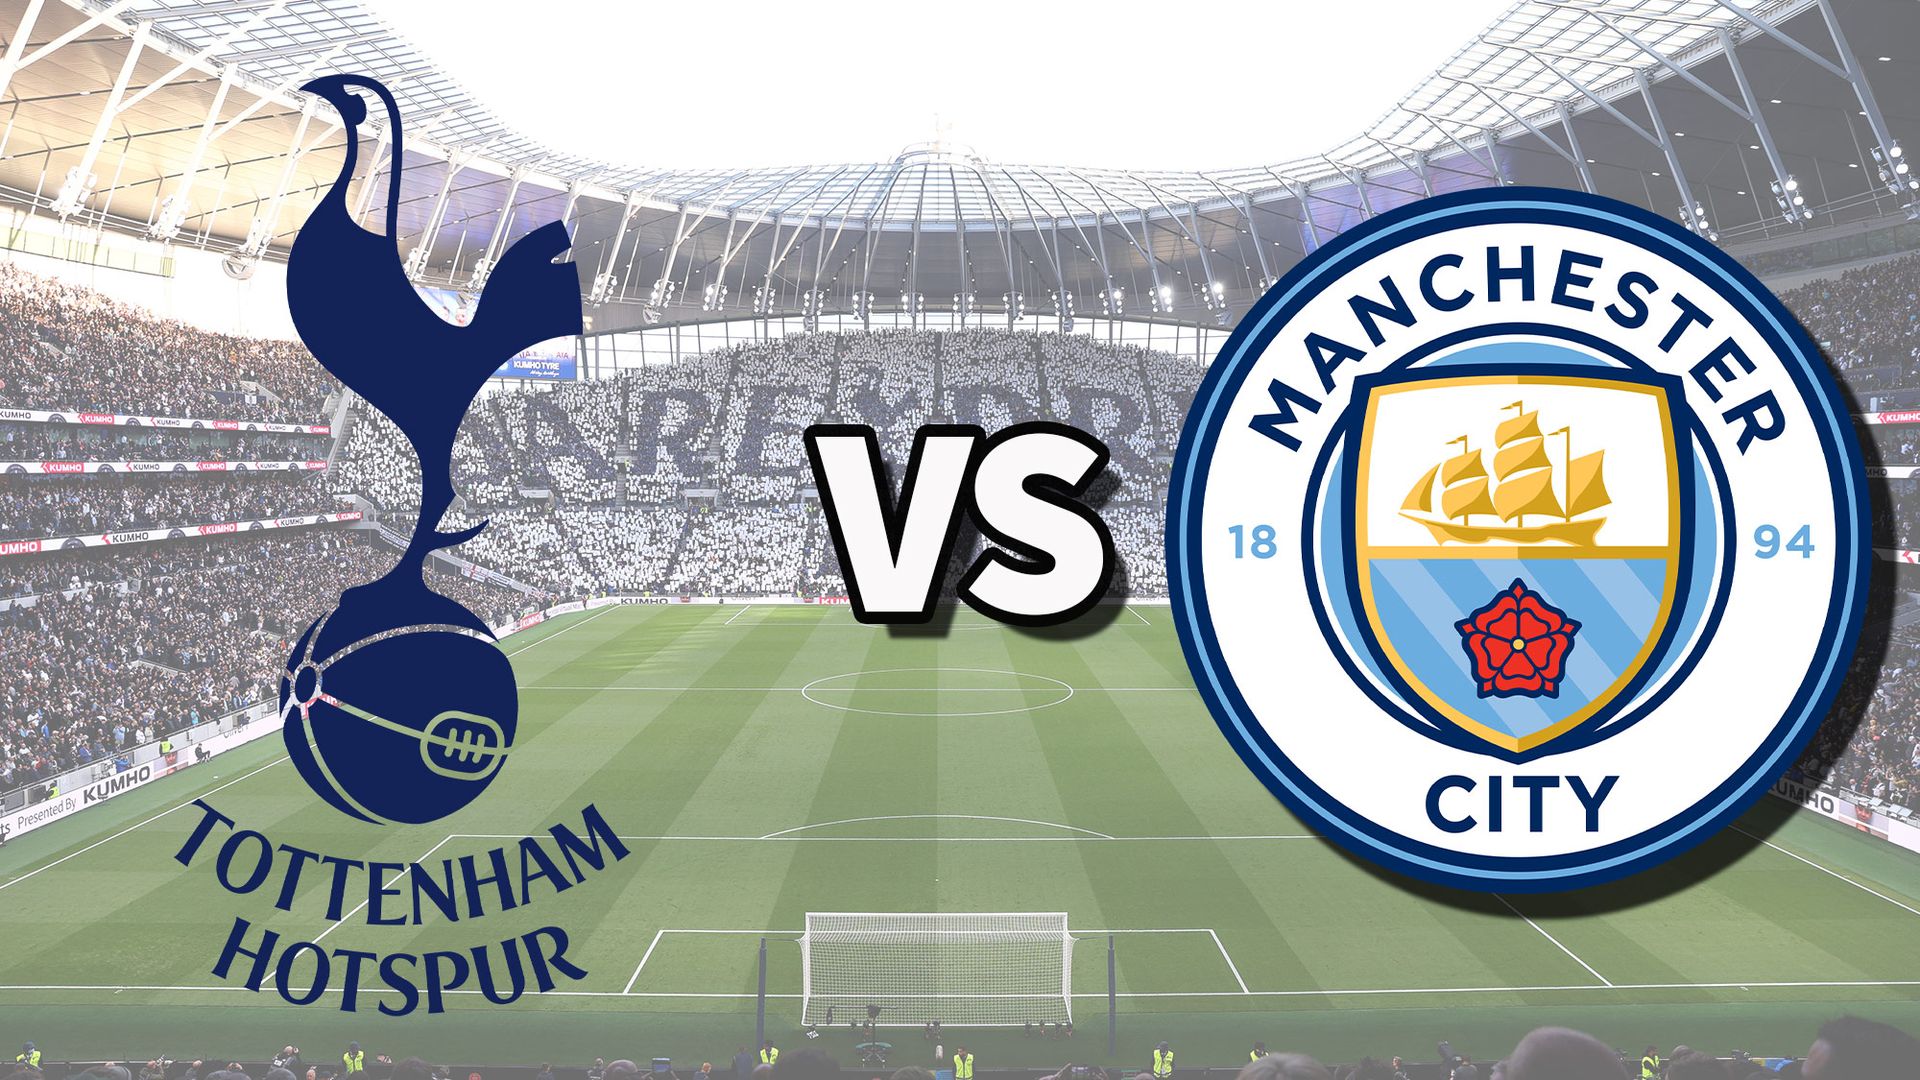 Tottenham vs Man City live stream How to watch Premier League game